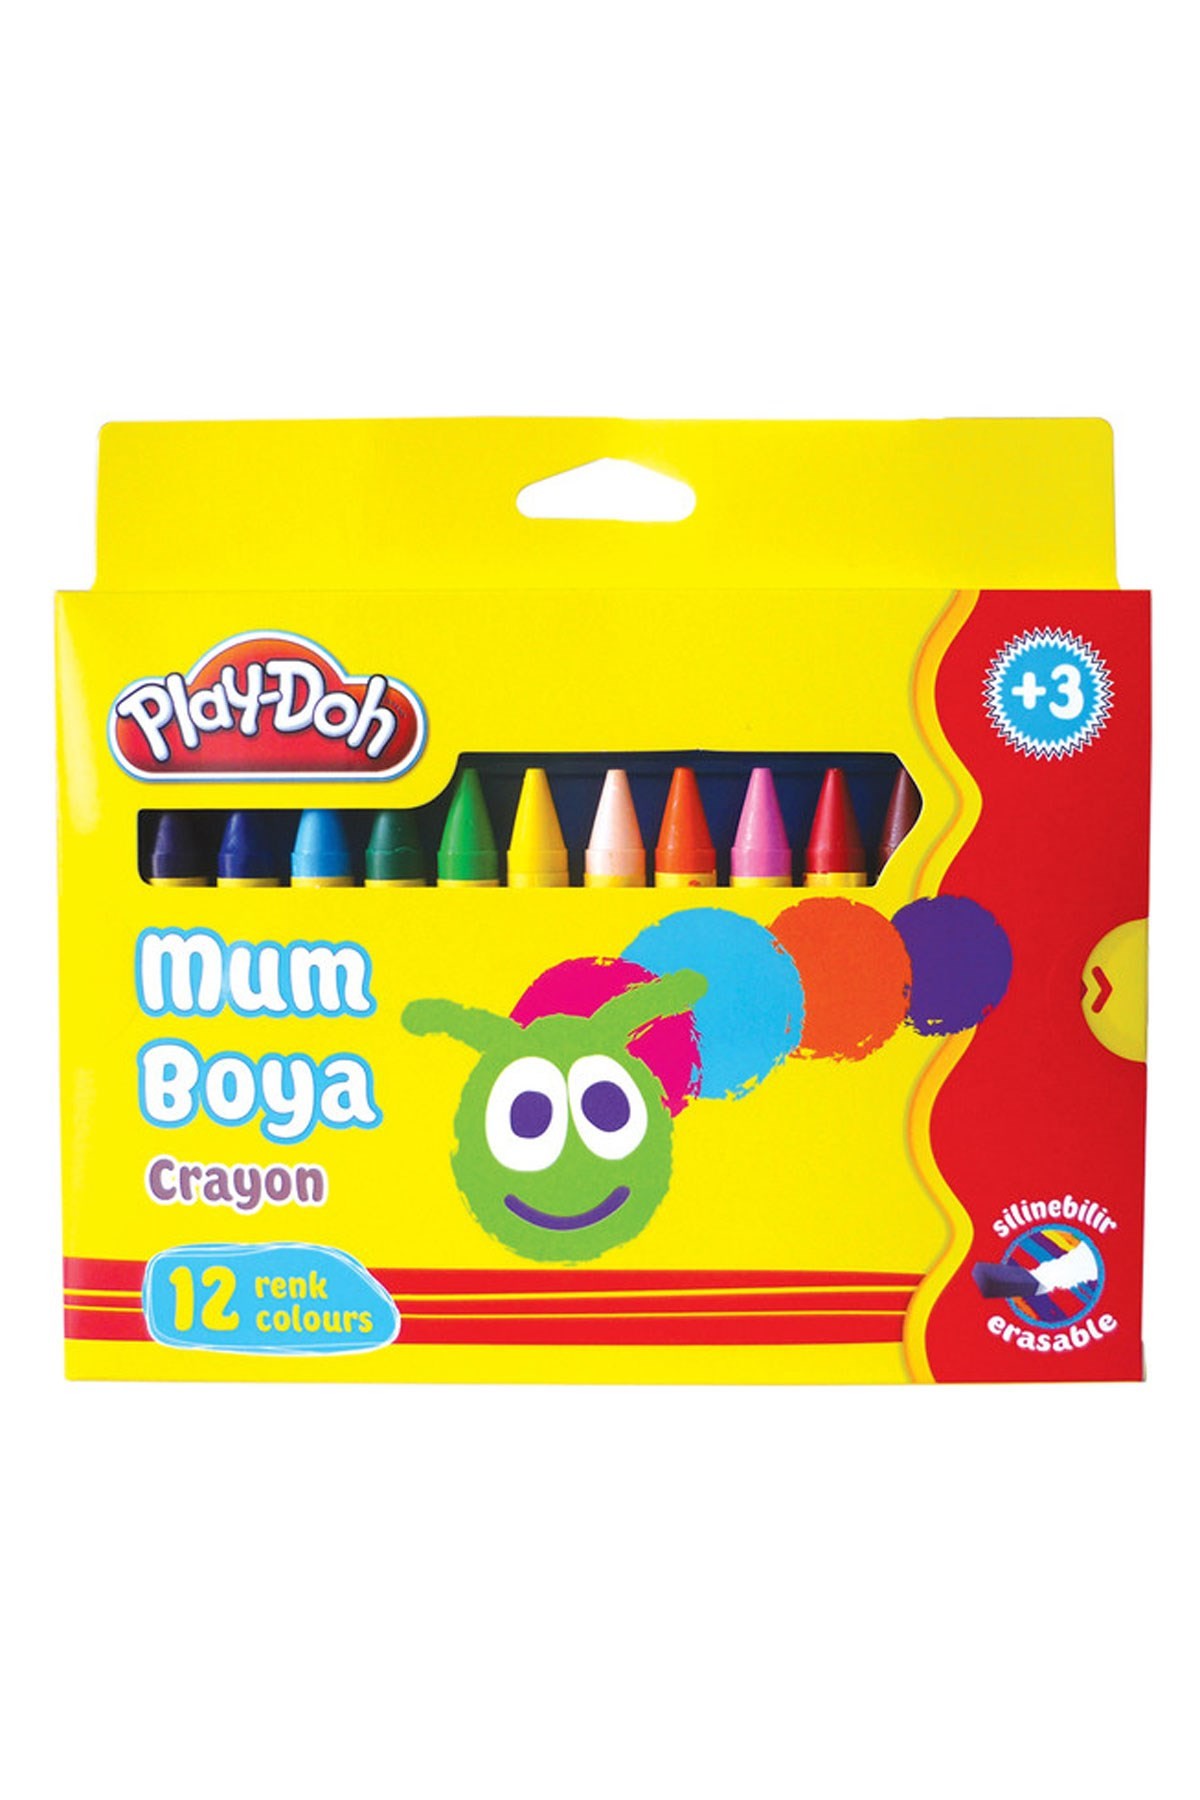 Play-Doh Crayon Mum Boya Karton Kutu 12 Renk